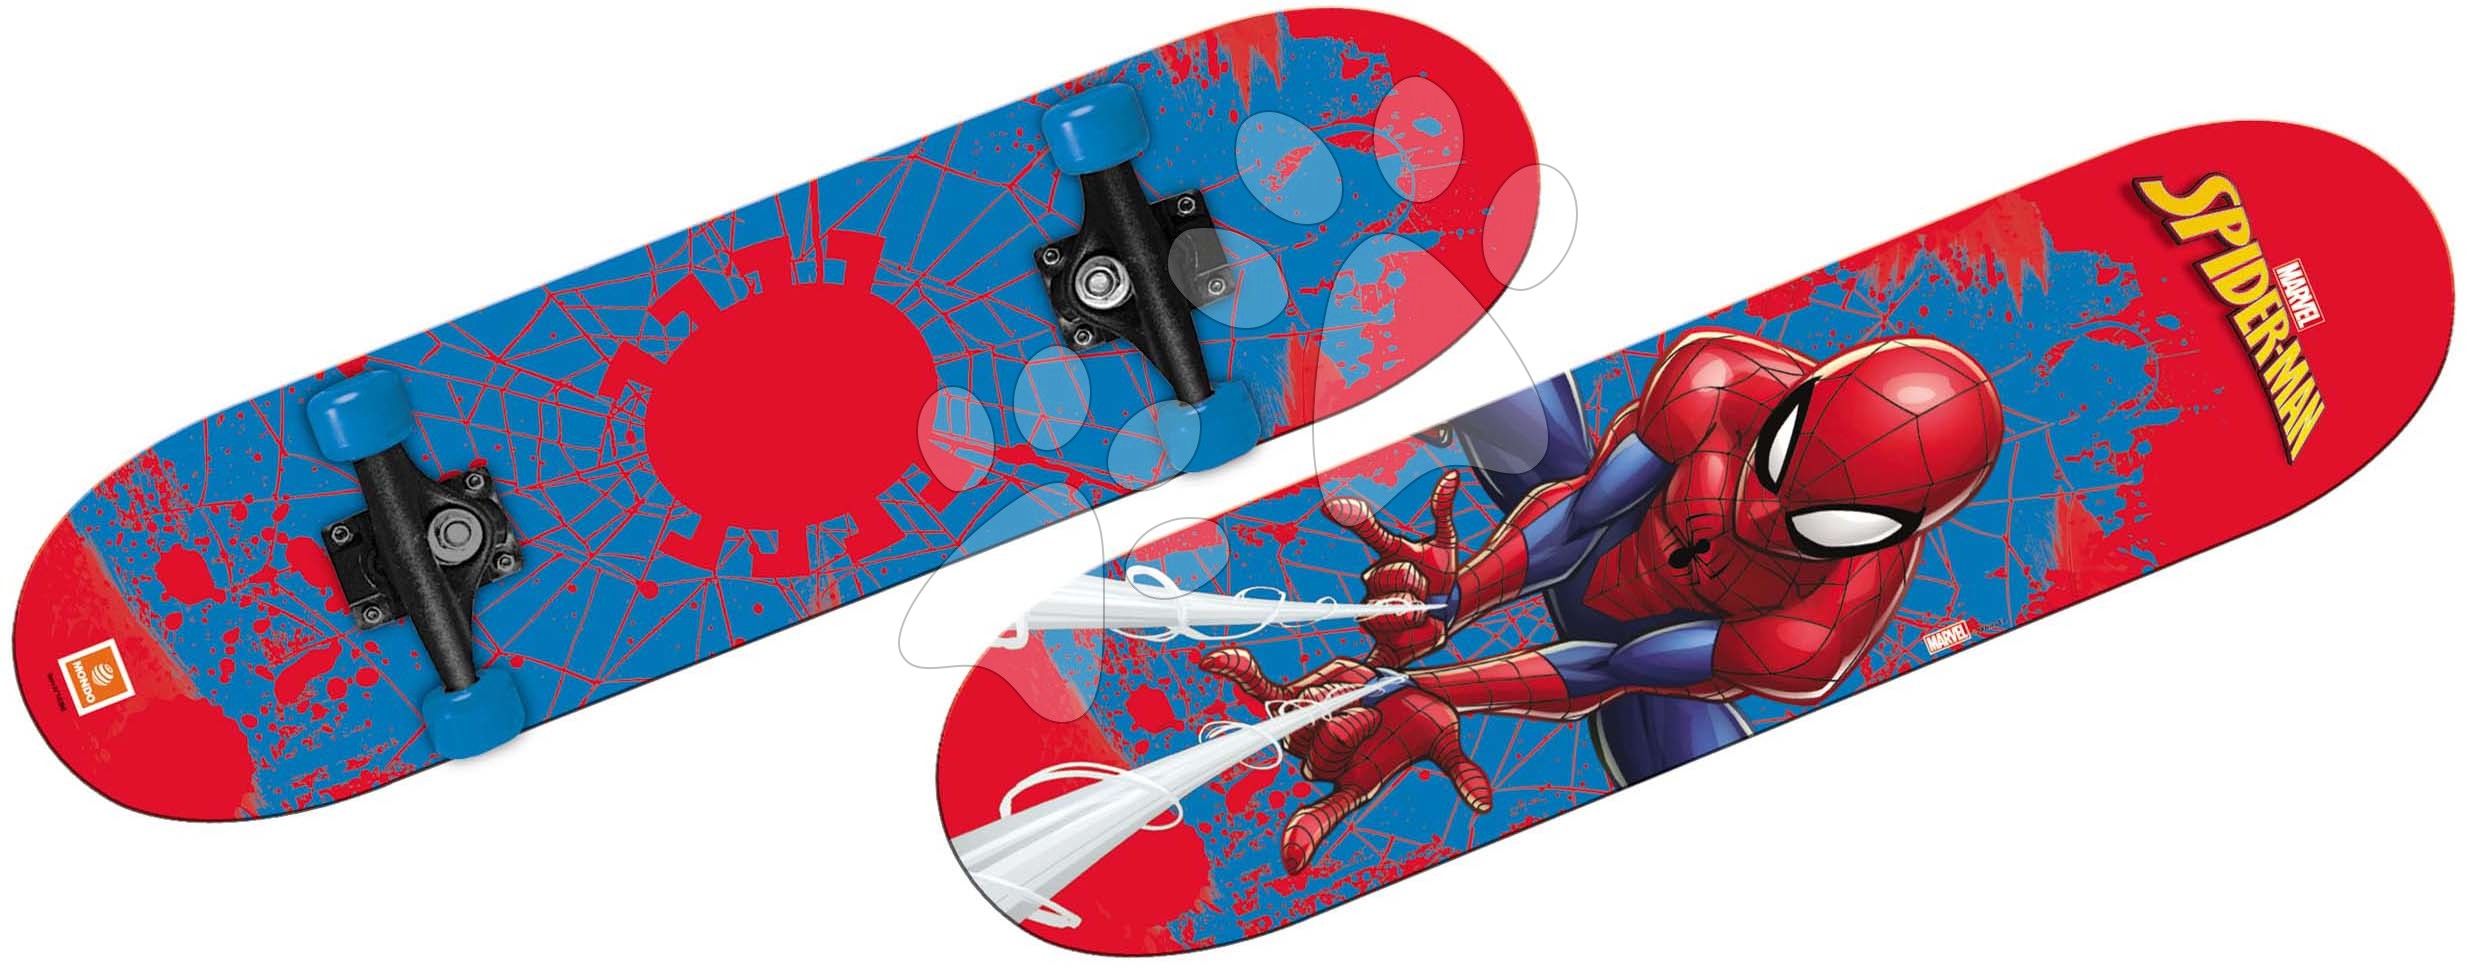 Detské skateboardy - Skateboard Spiderman Mondo dĺžka 80 cm